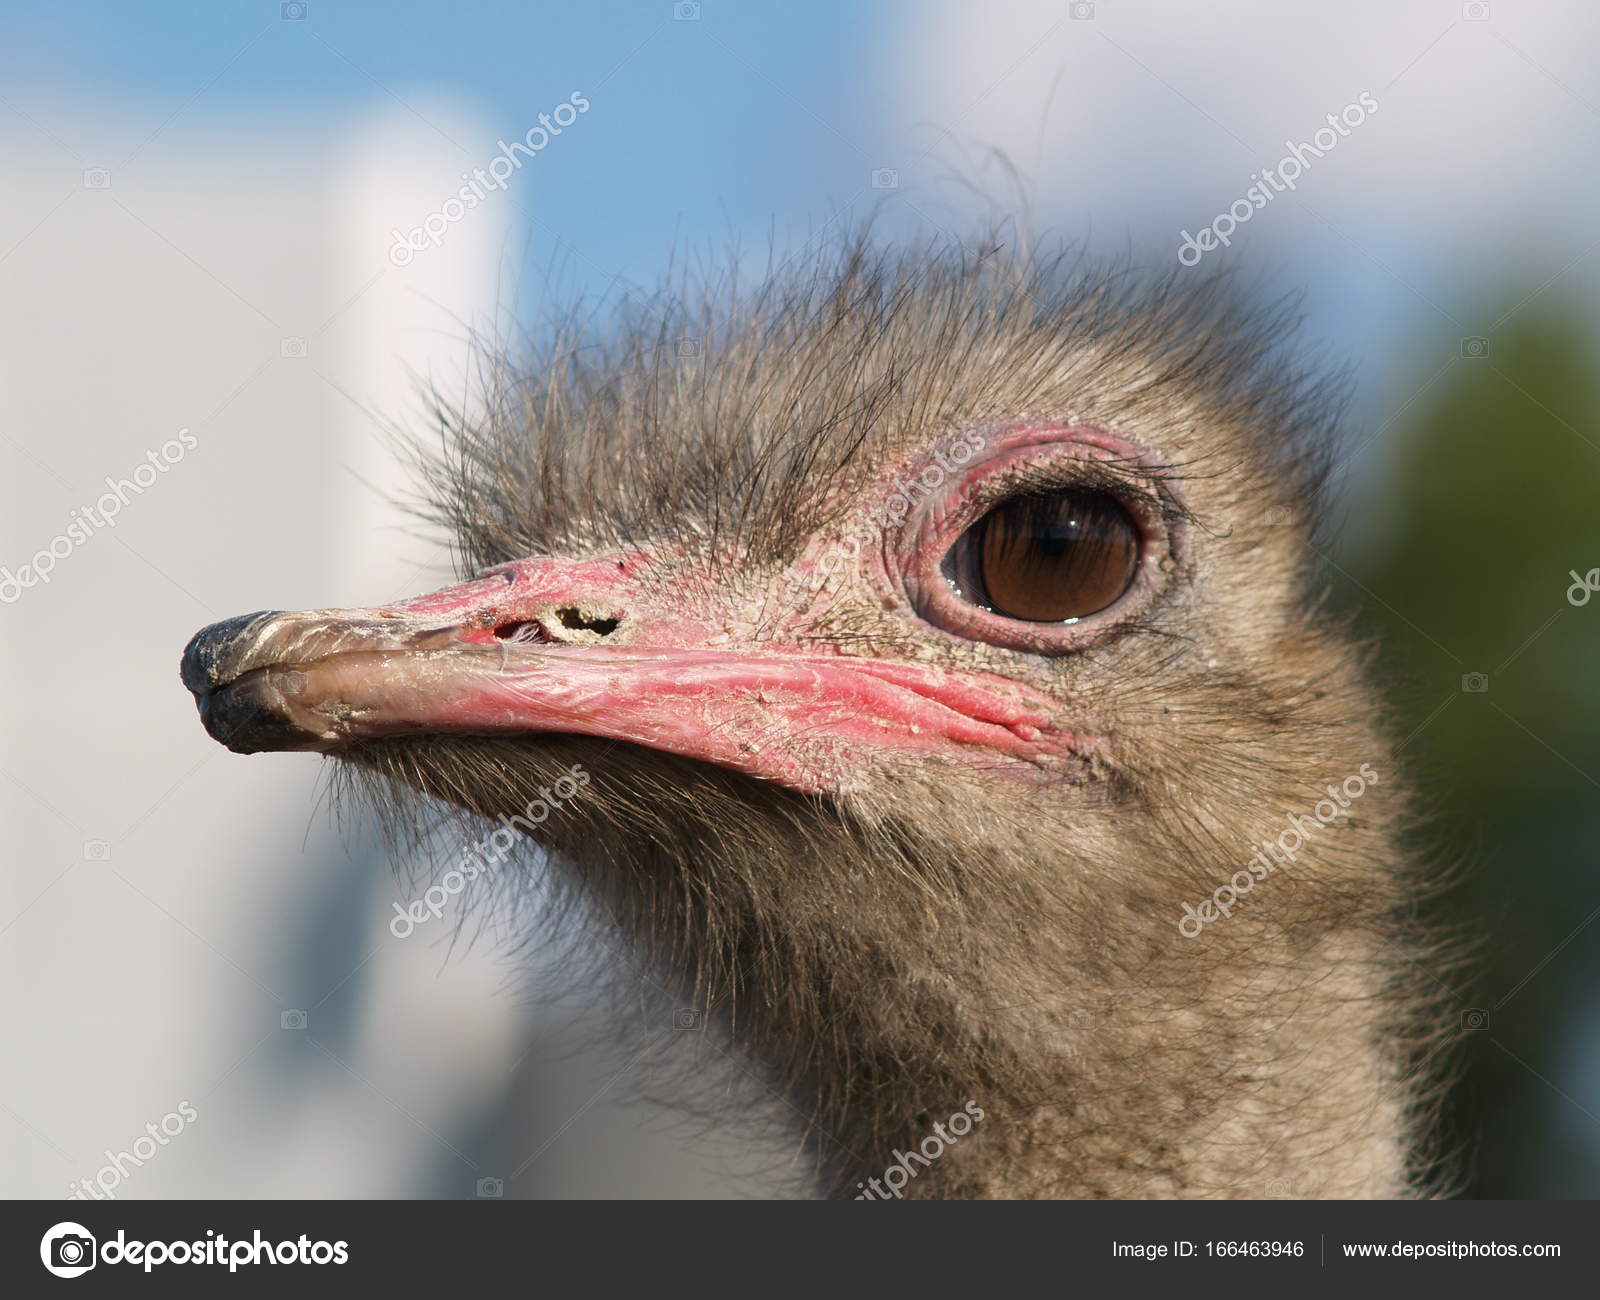 ostrich close-up — Stock Photo © maxim1717 #166463946